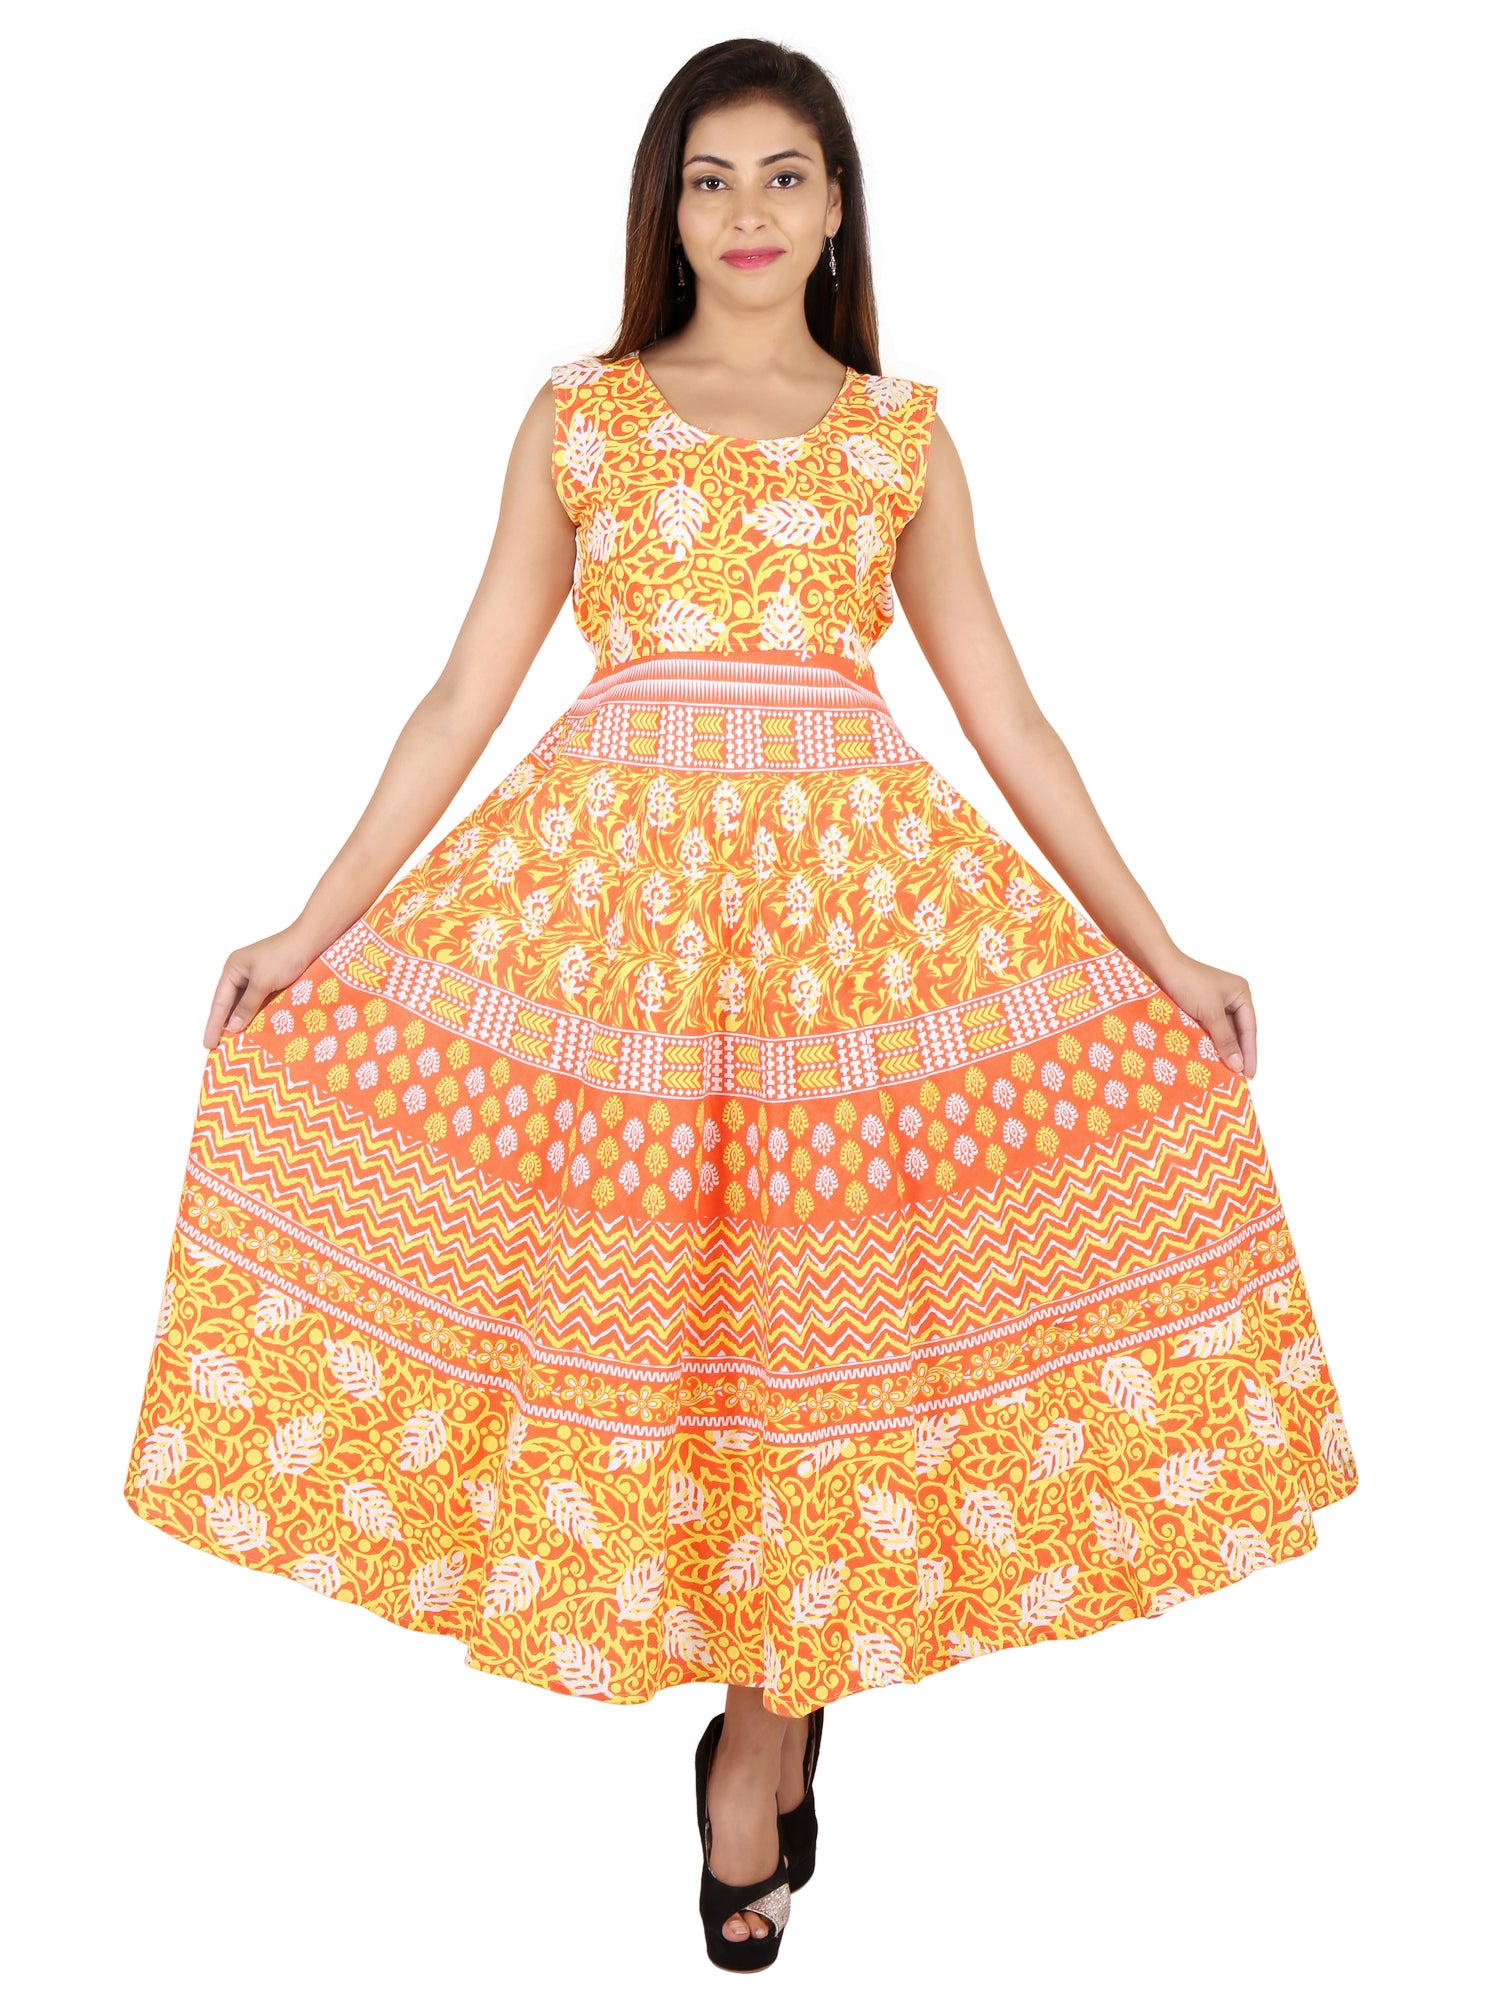 Jaipuri Women Cotton  Semi-Stitched Fabric Maxi Dress -Free Size JAIPUR PRINTS